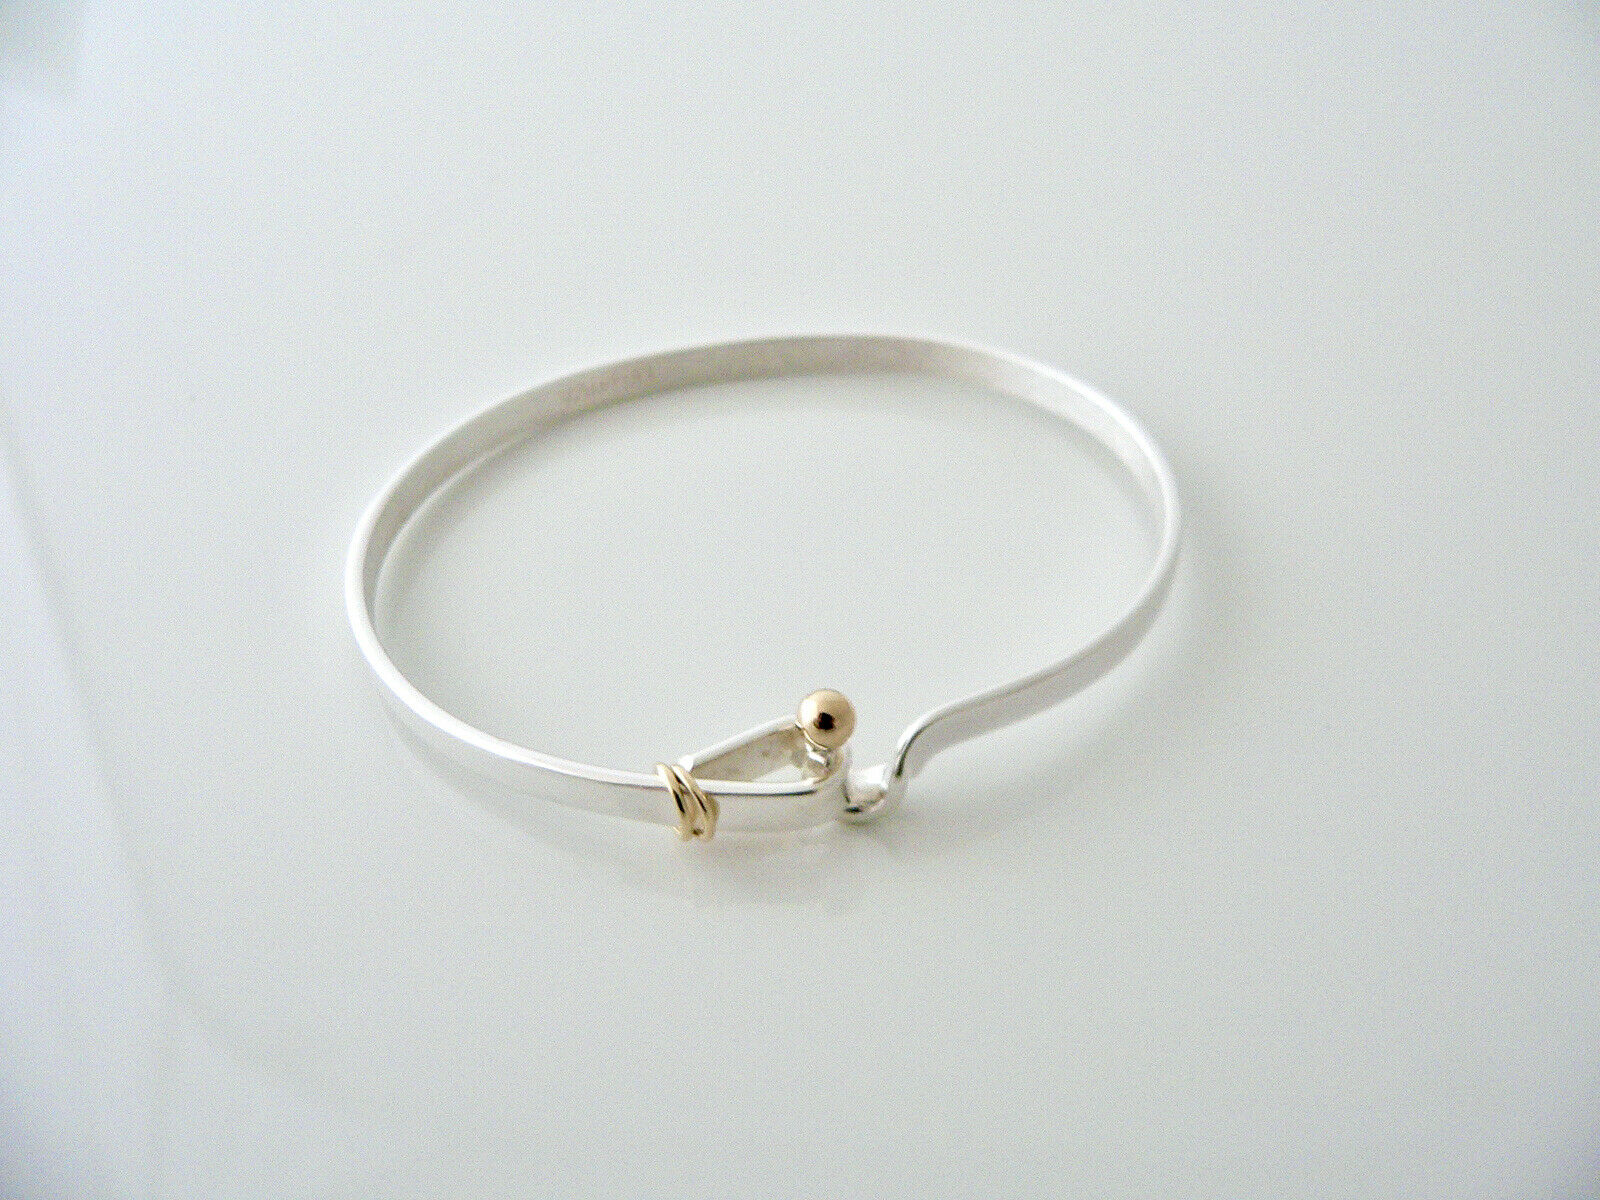 Tiffany & Co Silver 18K Gold Hook & Eye Bangle Bracelet Gift Love Statement Art